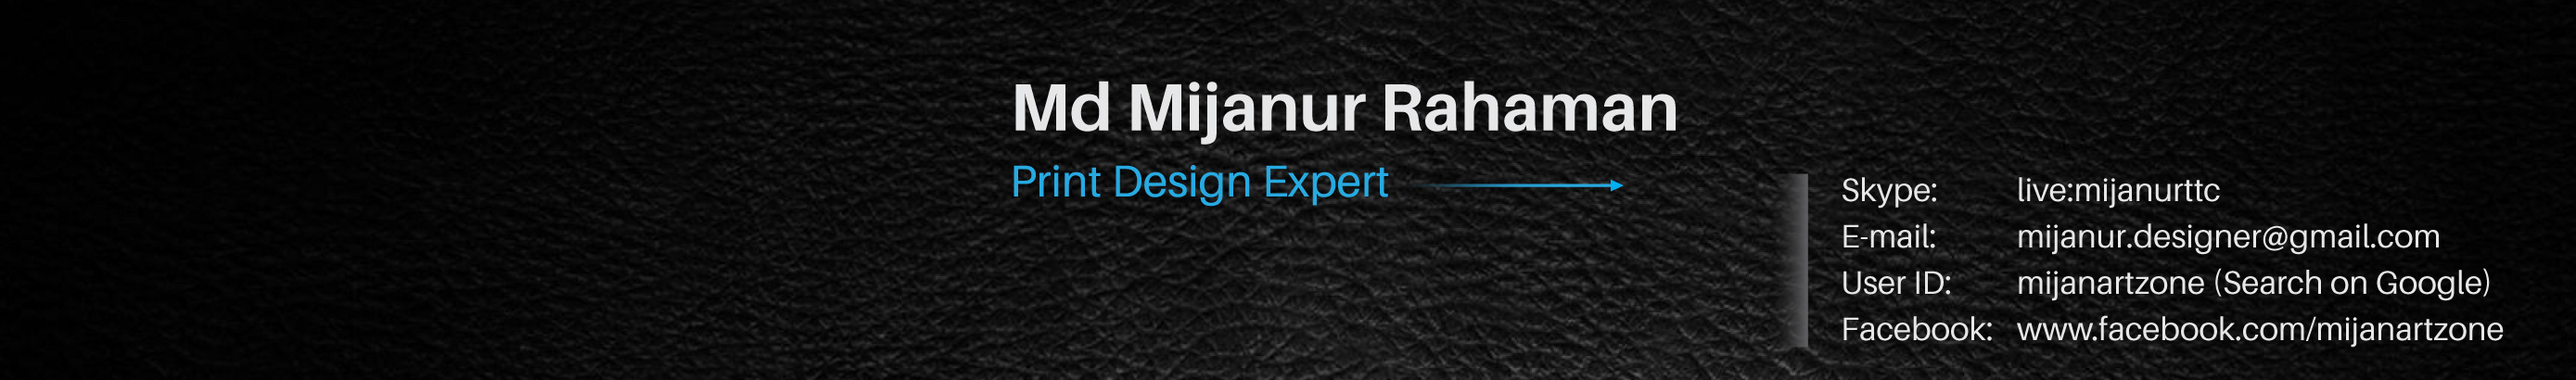 Md Mijanur Rahaman's profile banner